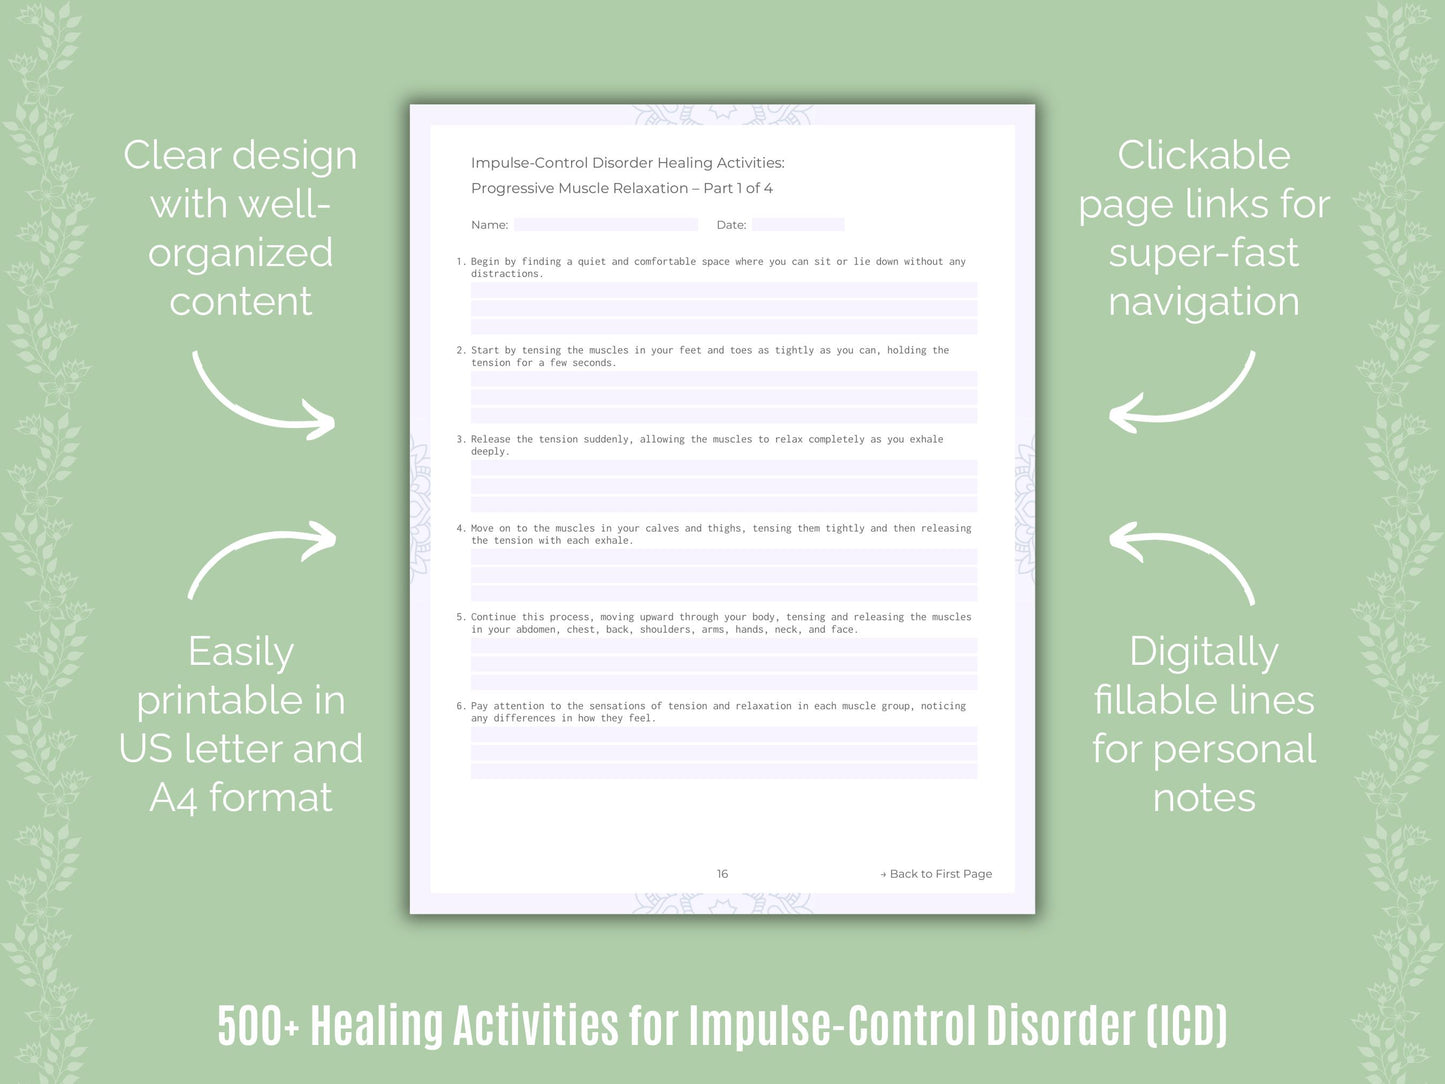 Impulse-Control Disorder (ICD) Healing Activities